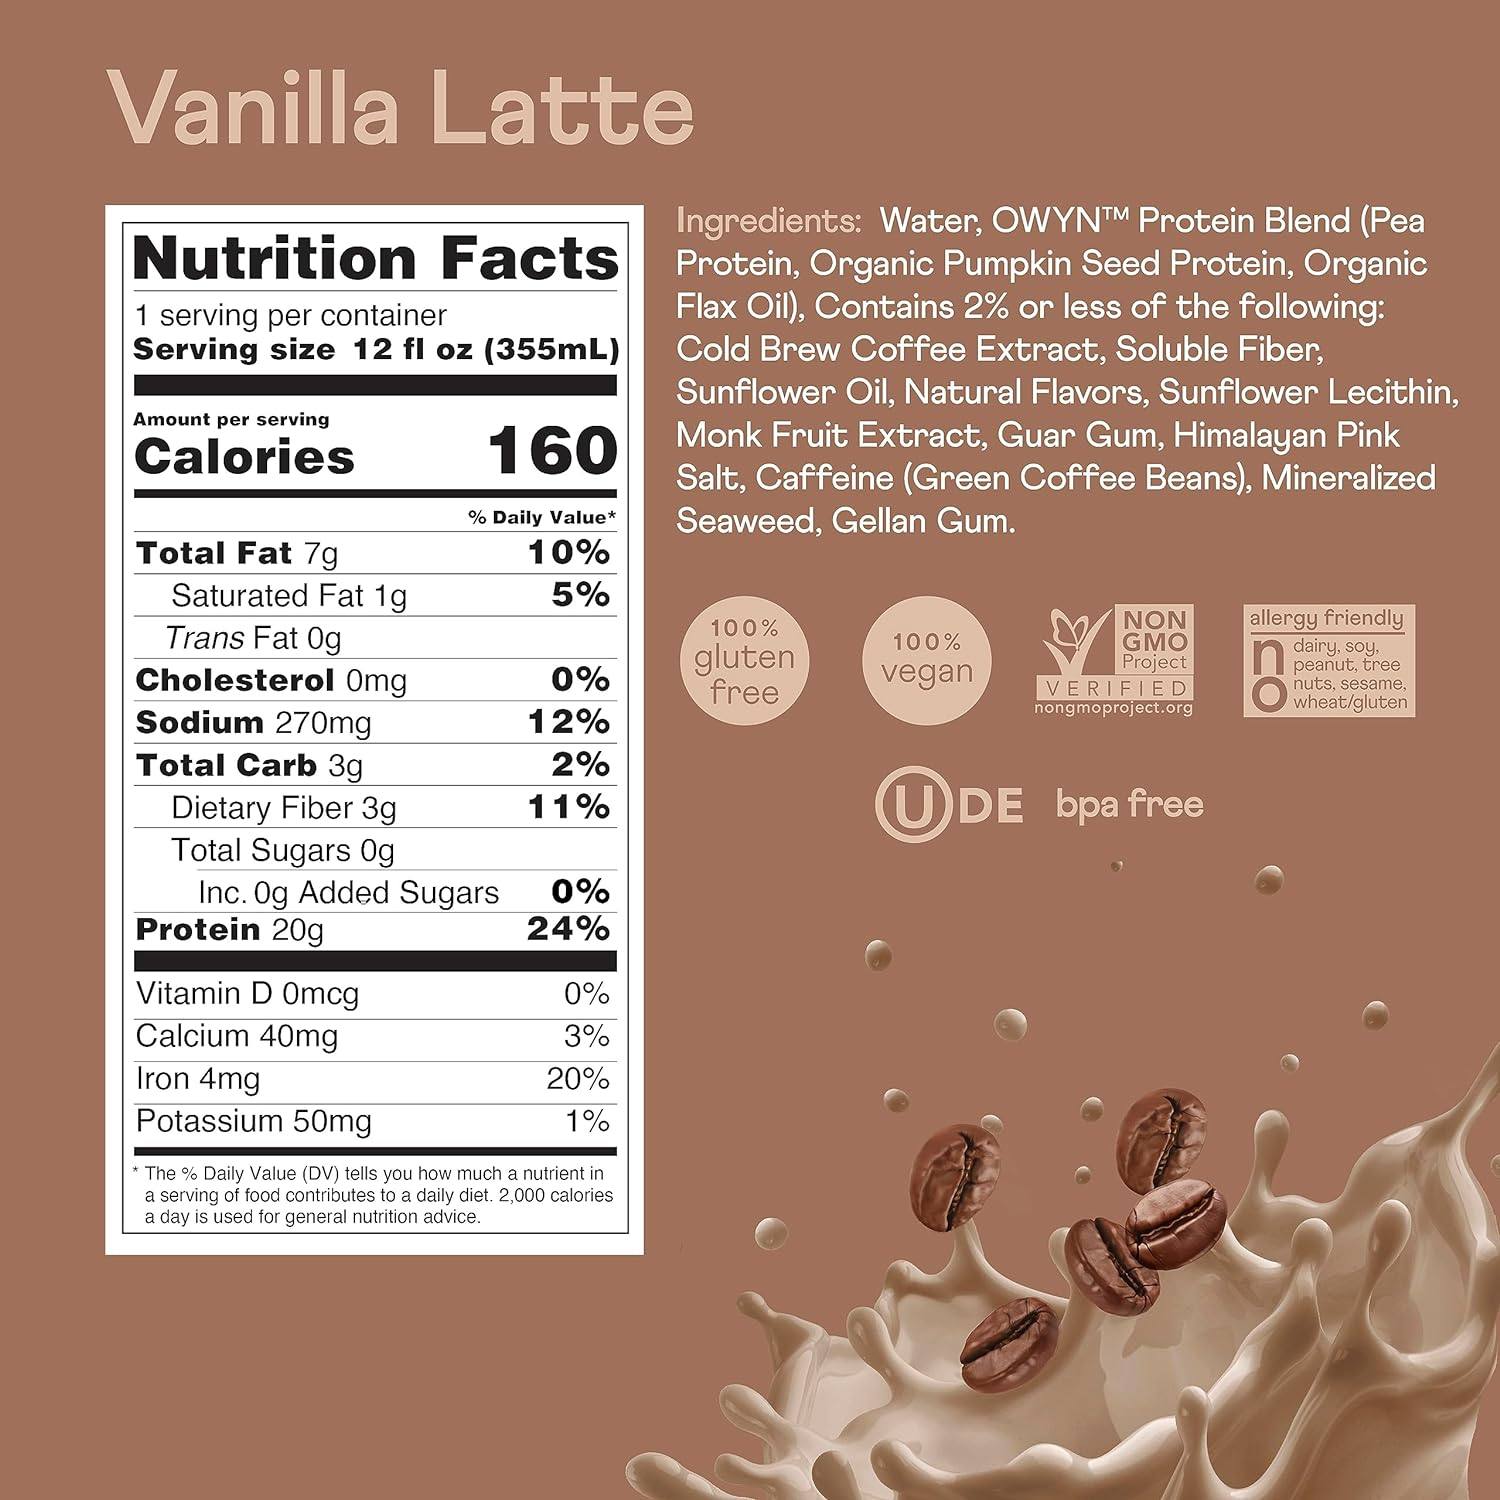 Owyn Doubleshot Protein Coffee Shake Vanilla Latte / 12 Bottles